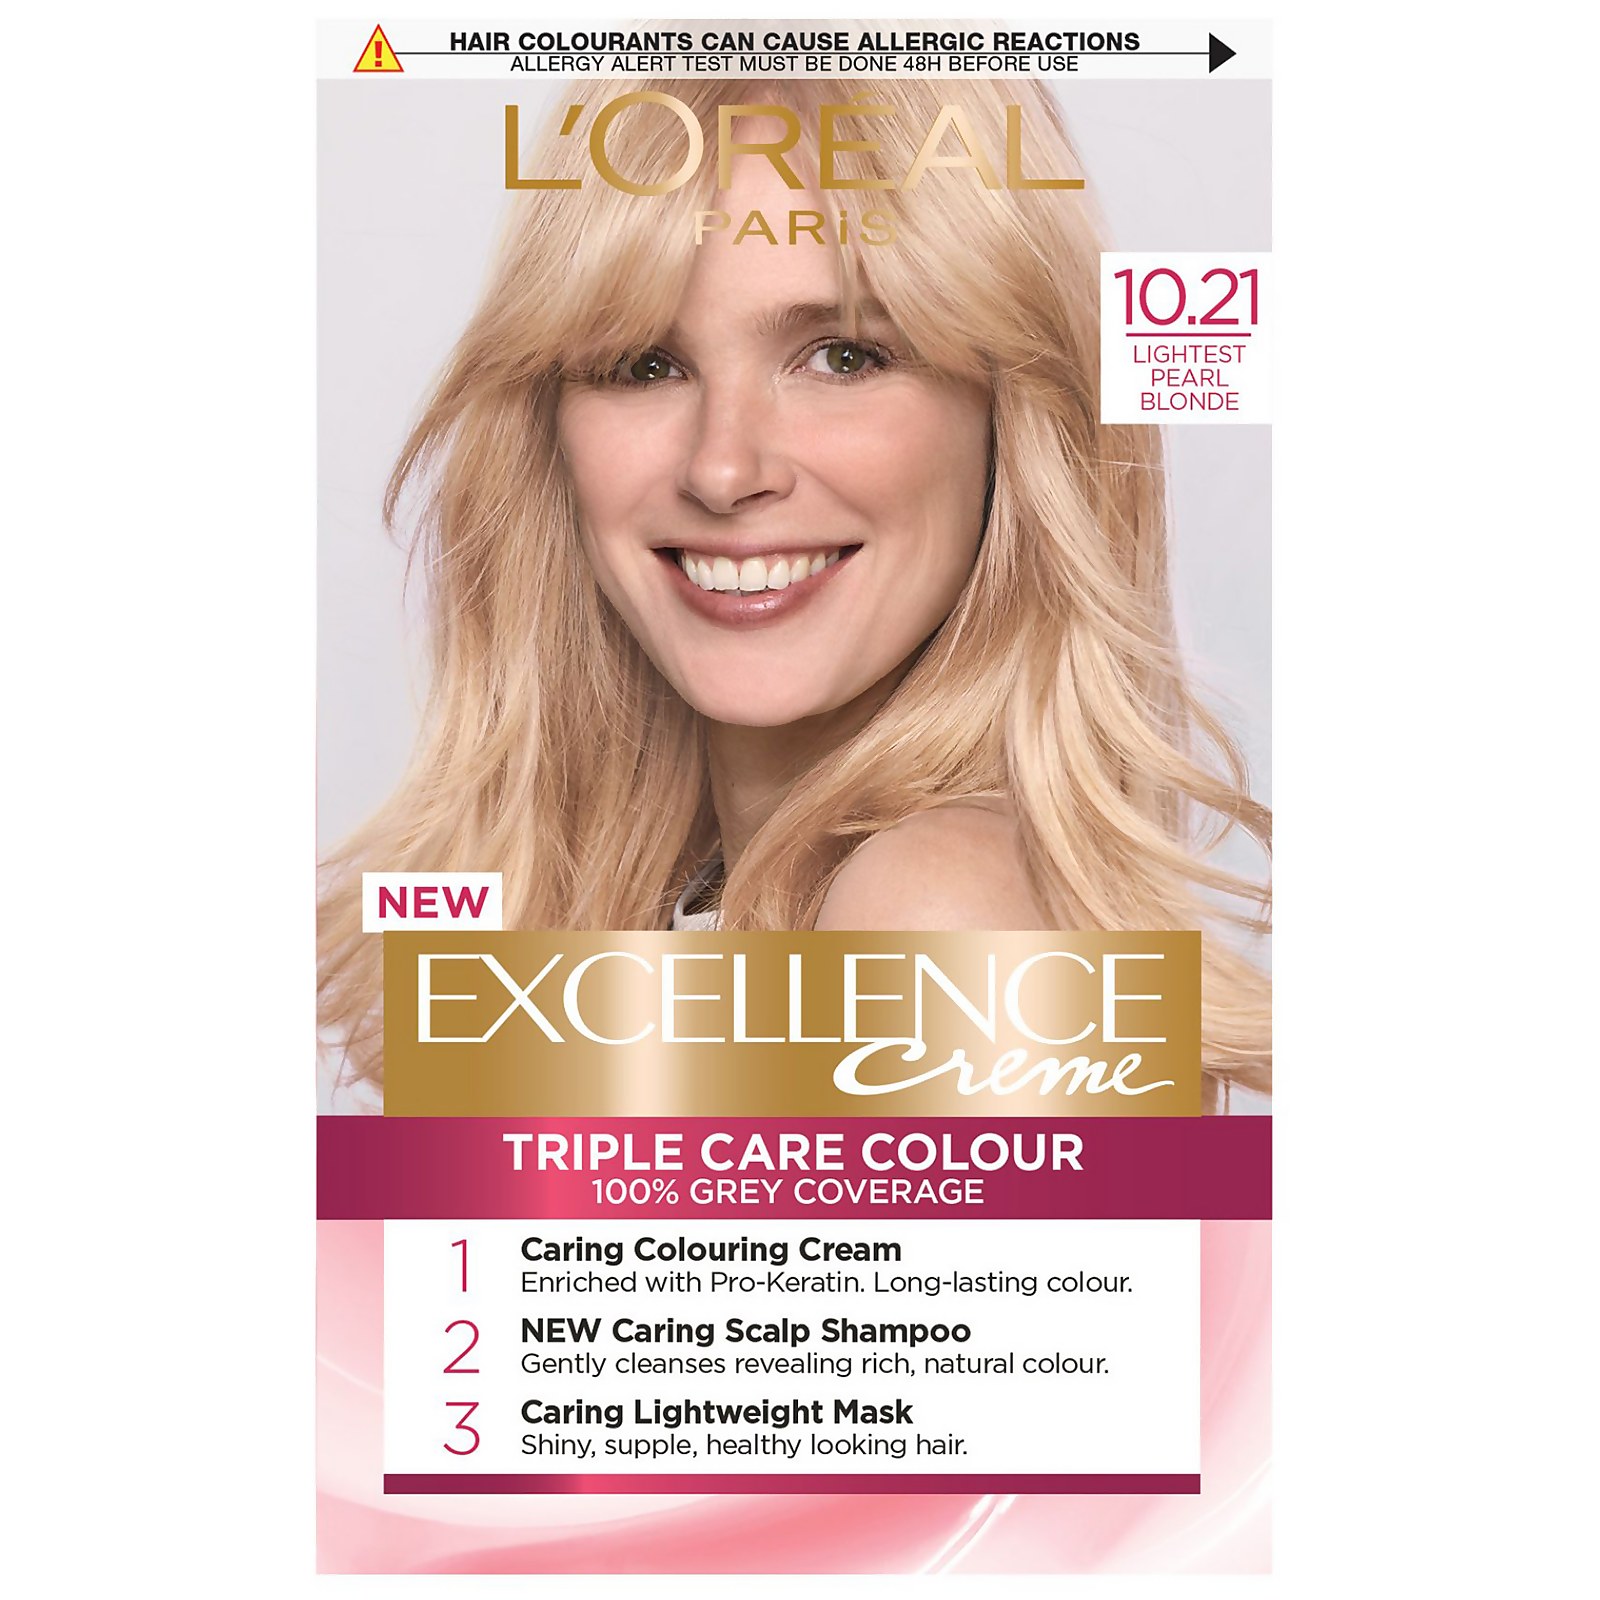 L'Oreal Paris Excellence Creme Permanent Hair Dye (Various Shades) - 10.21 Lightest Pearl Blonde